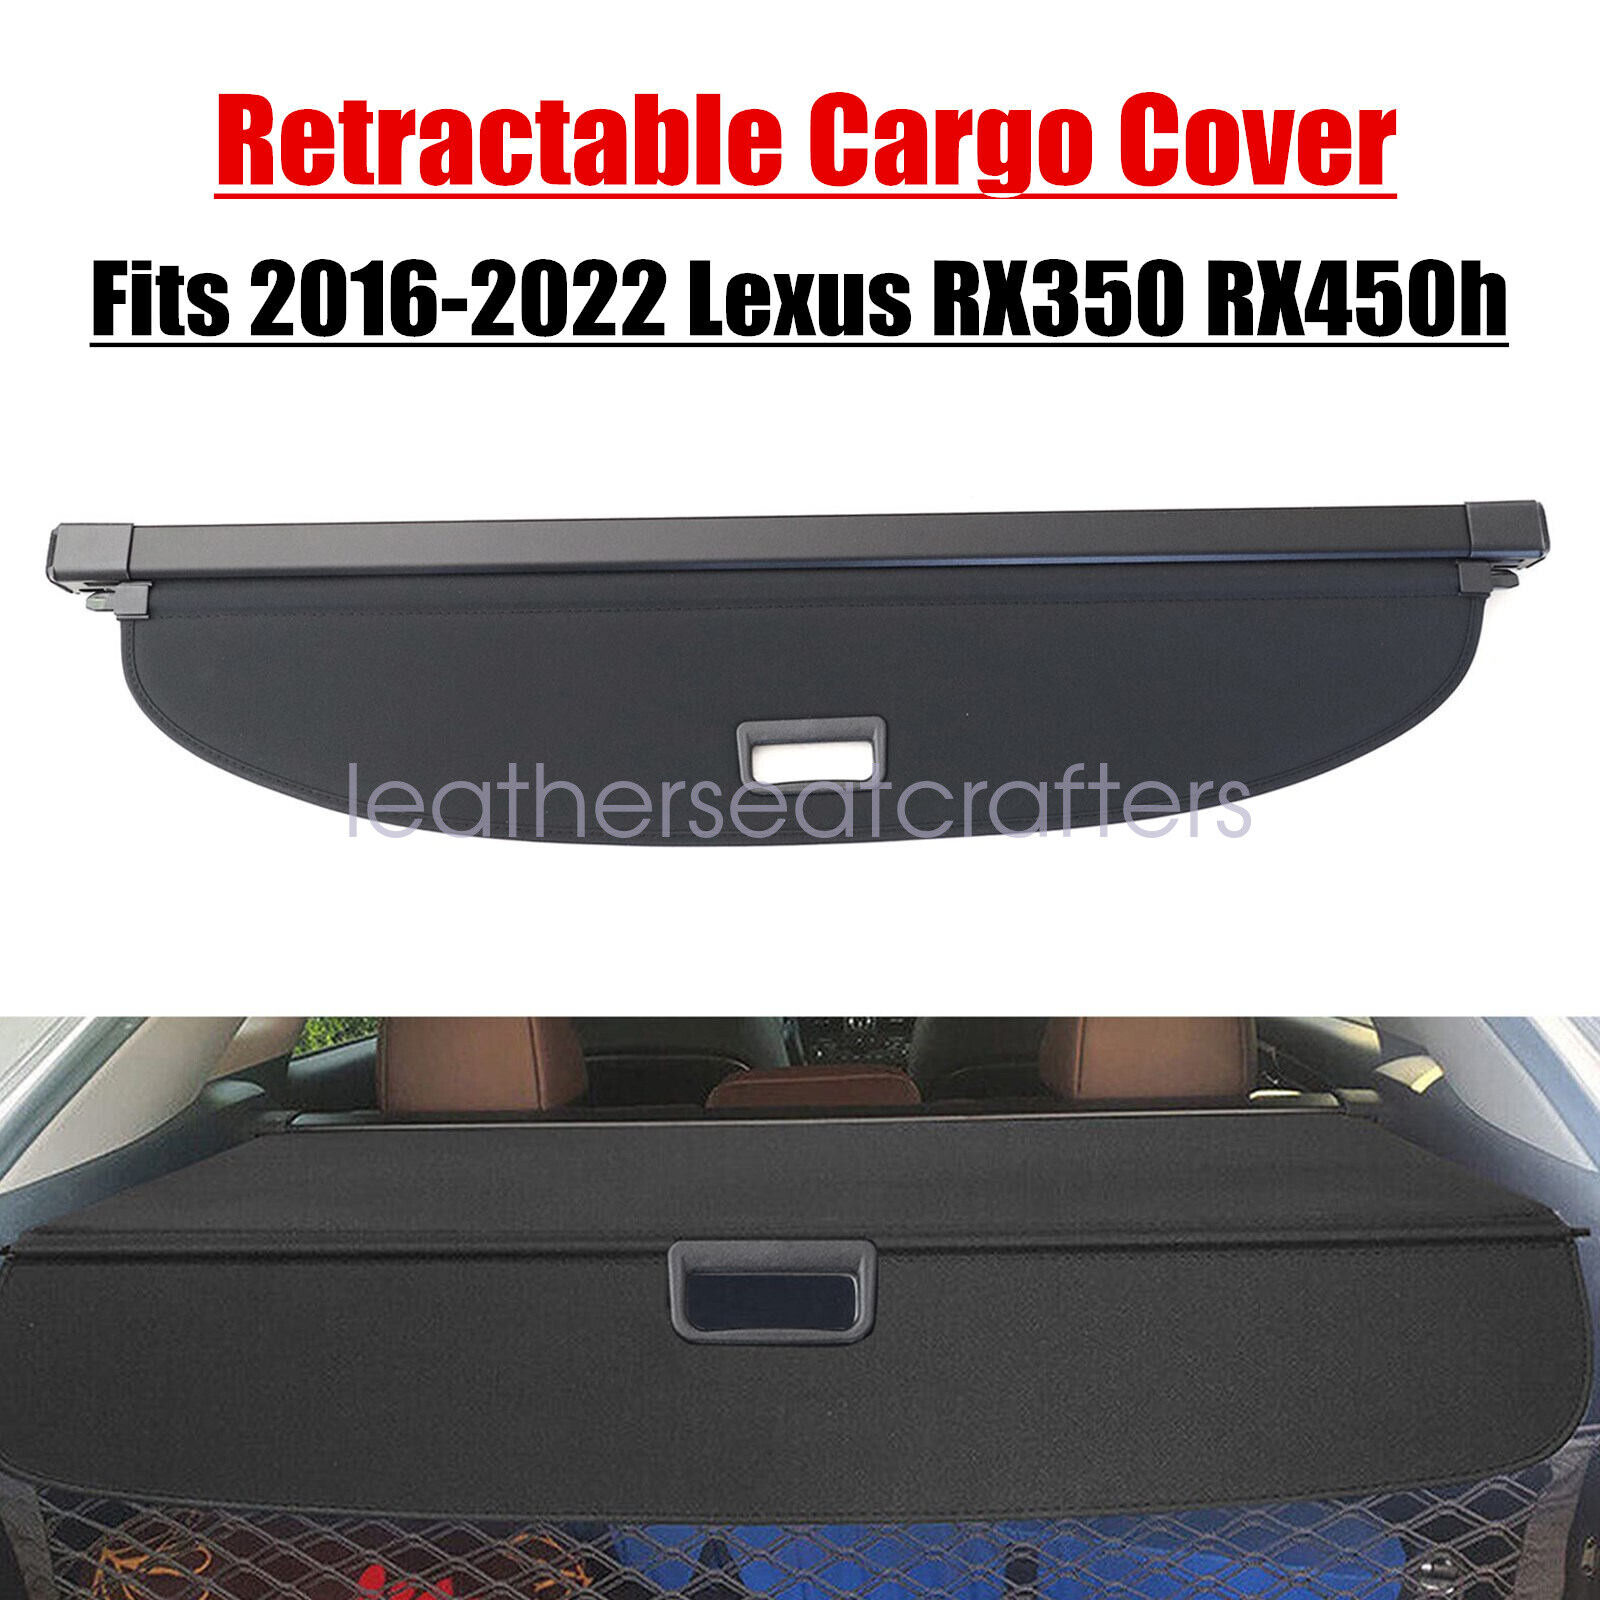 For 2016-2022 Lexus RX350 RX450h Rear Retractable Security Shield Cargo Cover